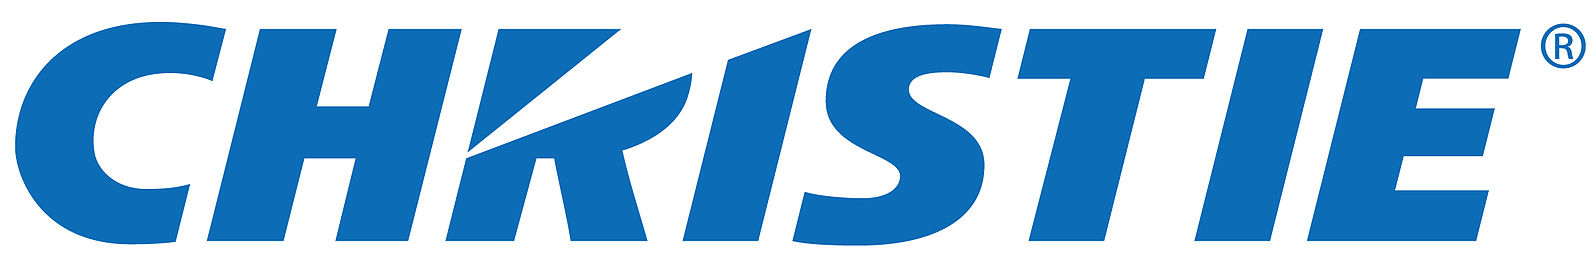 1596px-Christie-blue-logo